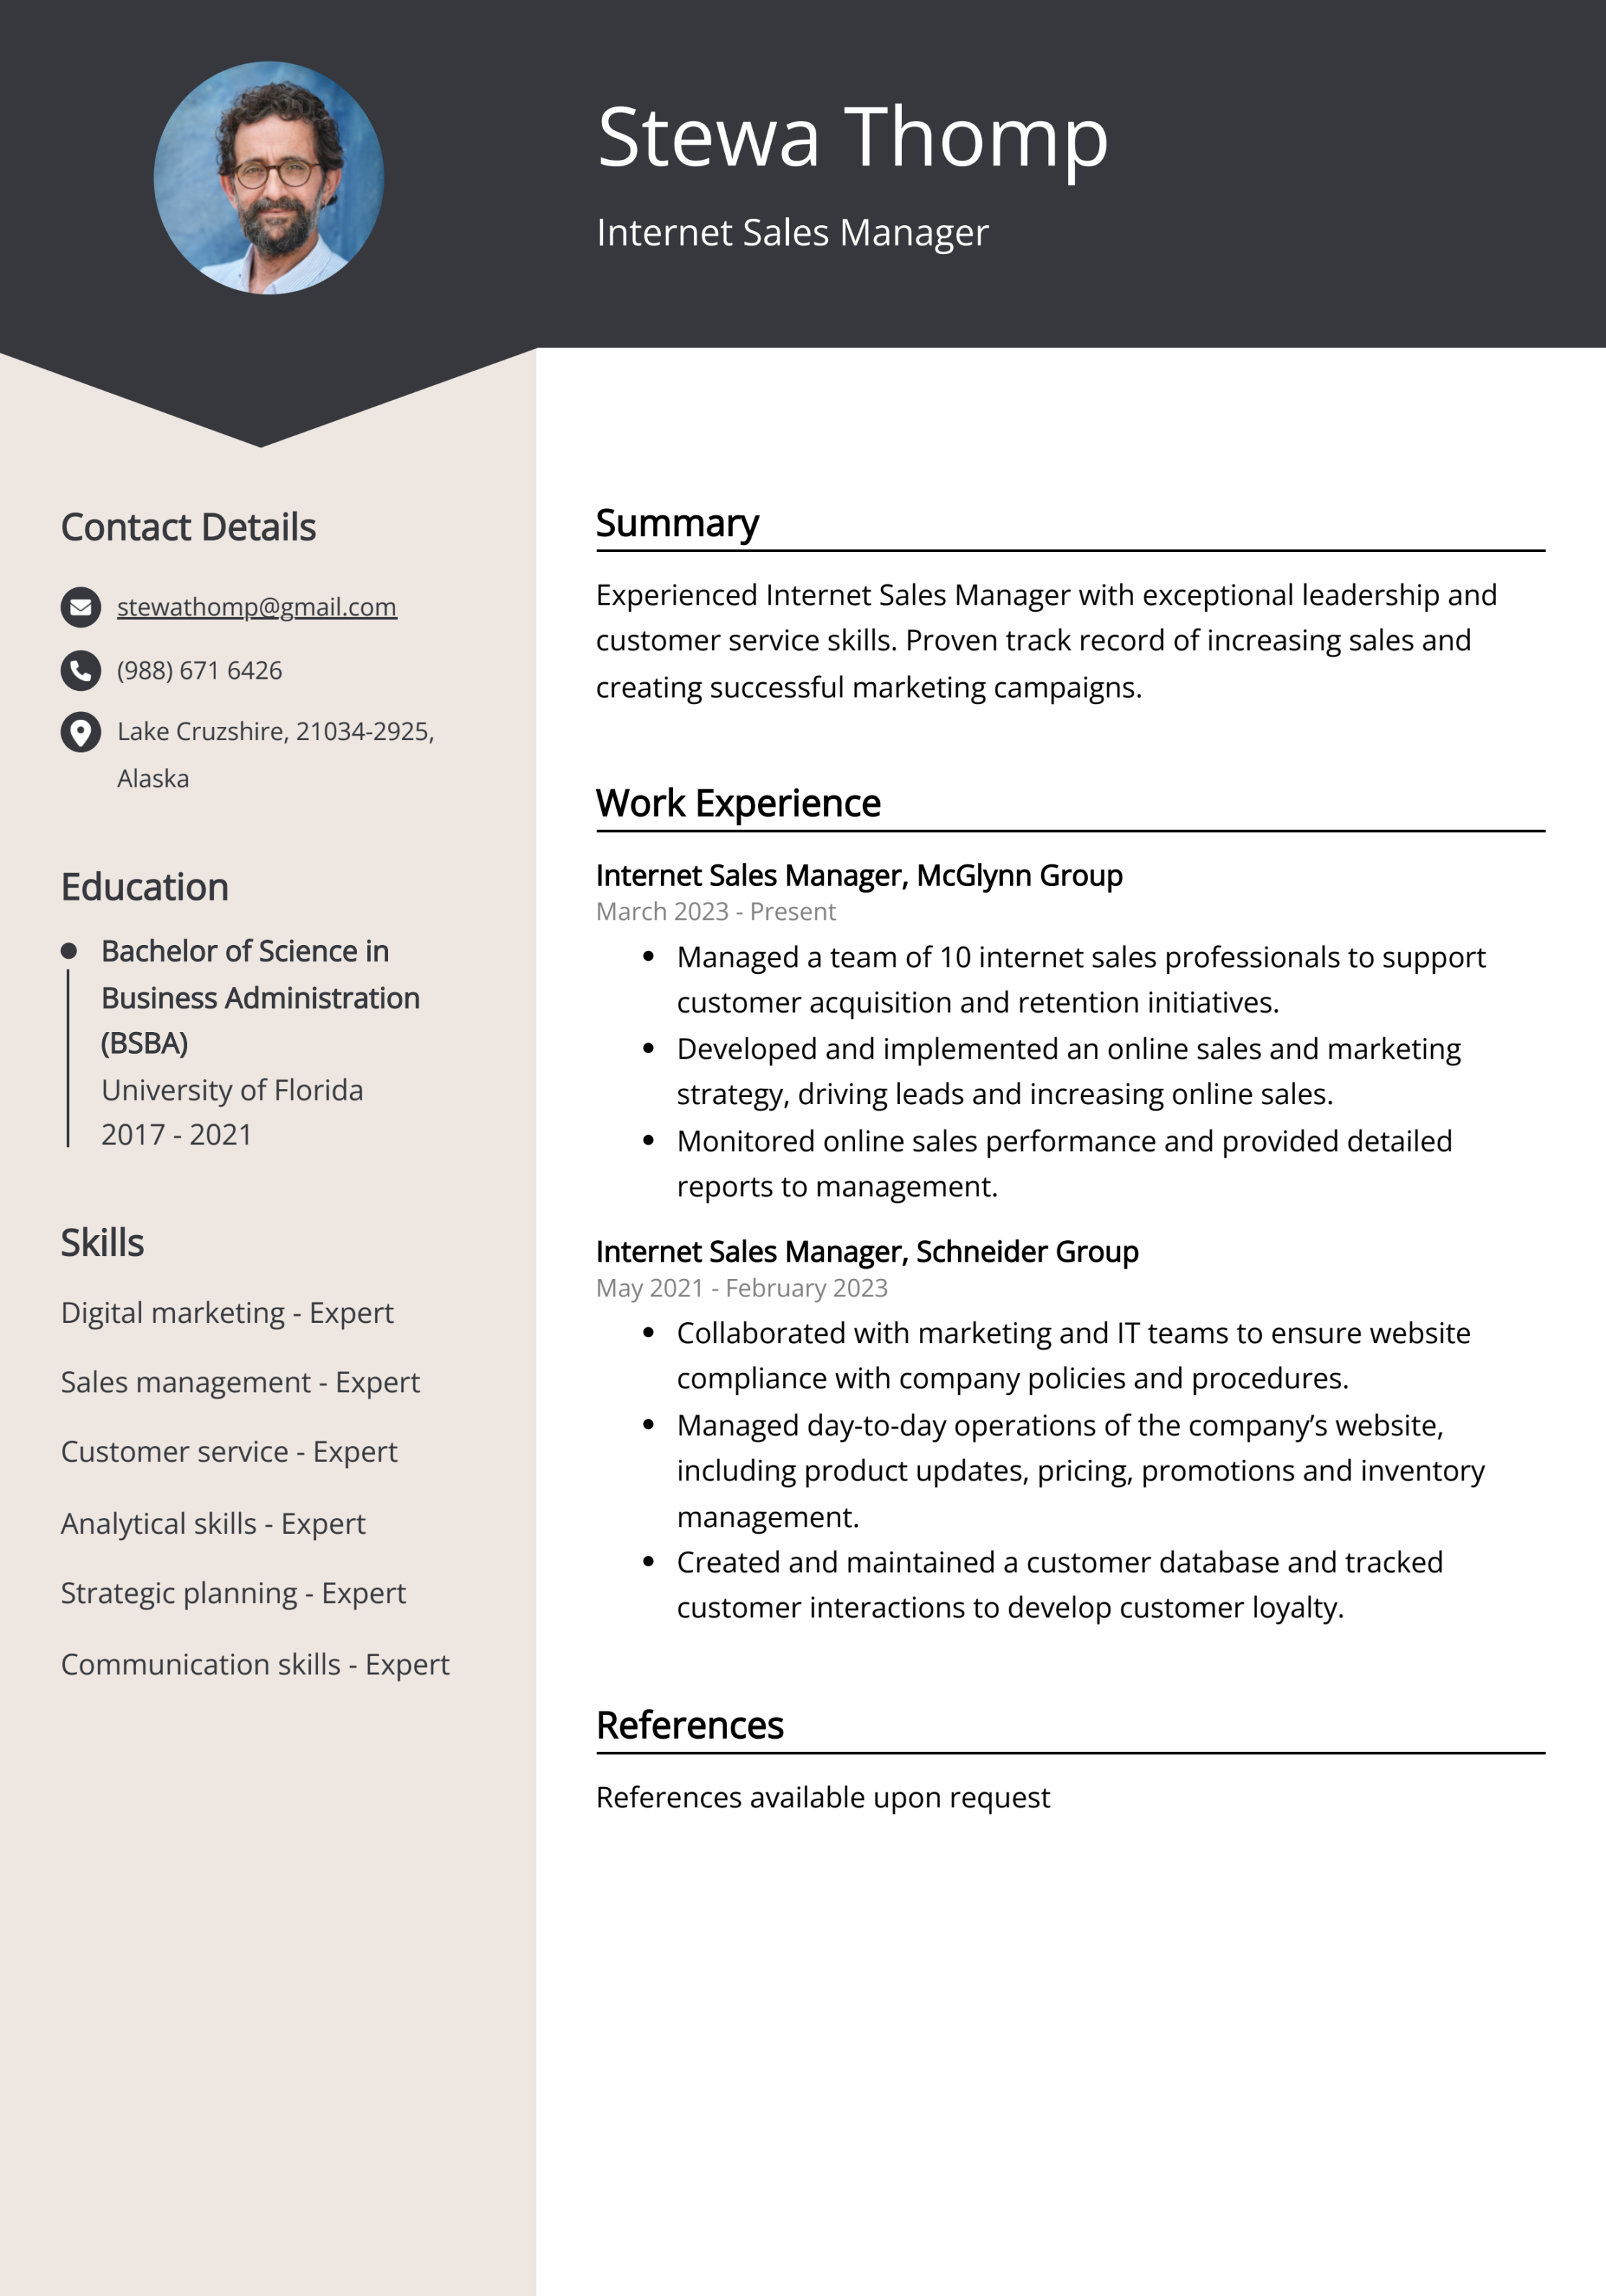 Internet Sales Manager CV: Sample & Guide [Entry Level + Senior Jobs]